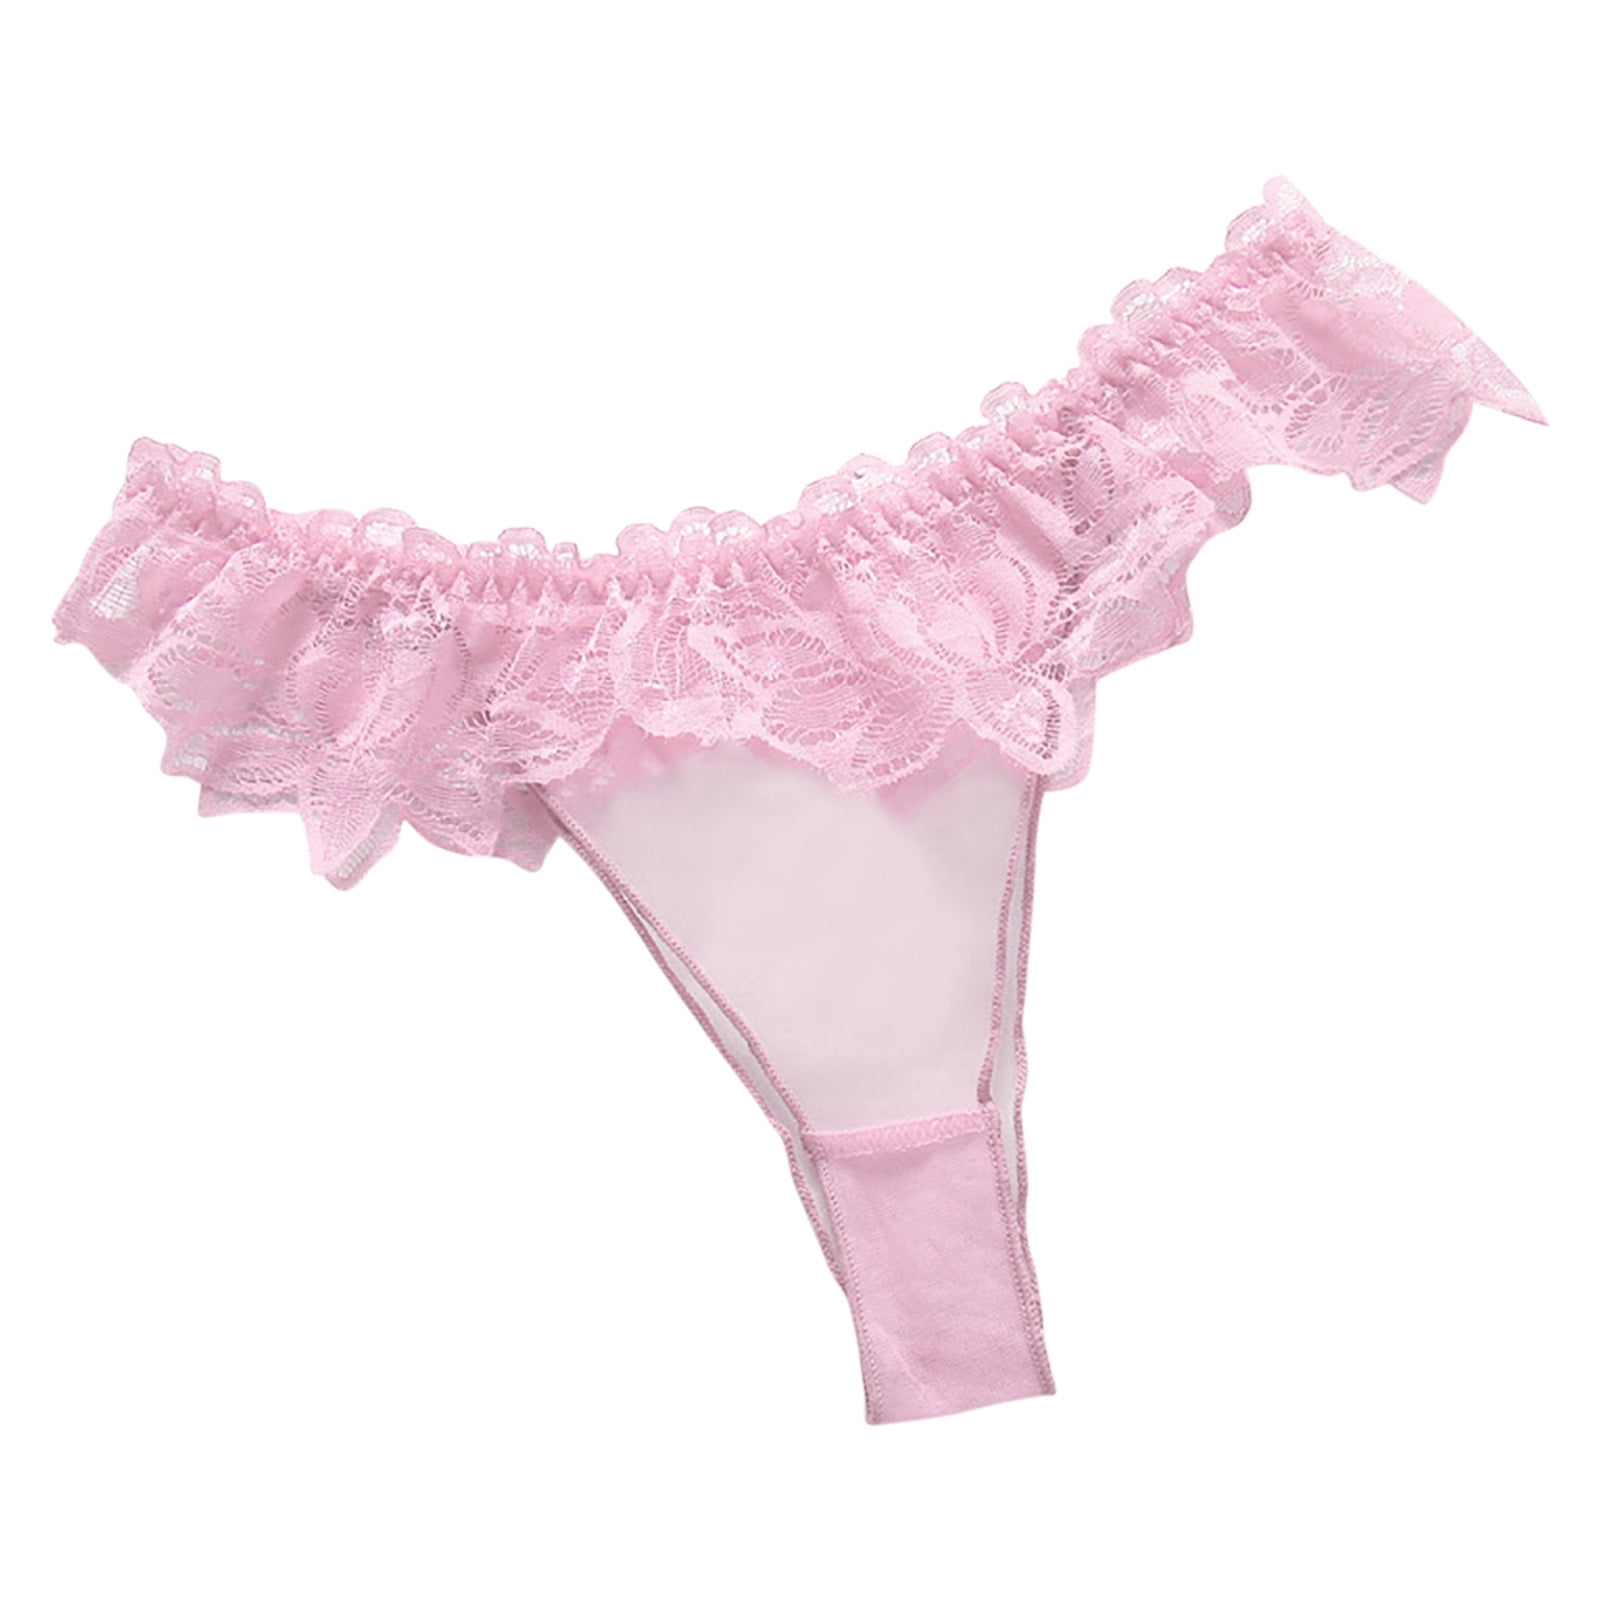 Lopecy-Sta Sexy Lace Women Solid Comfort Underwear Skin Friendly